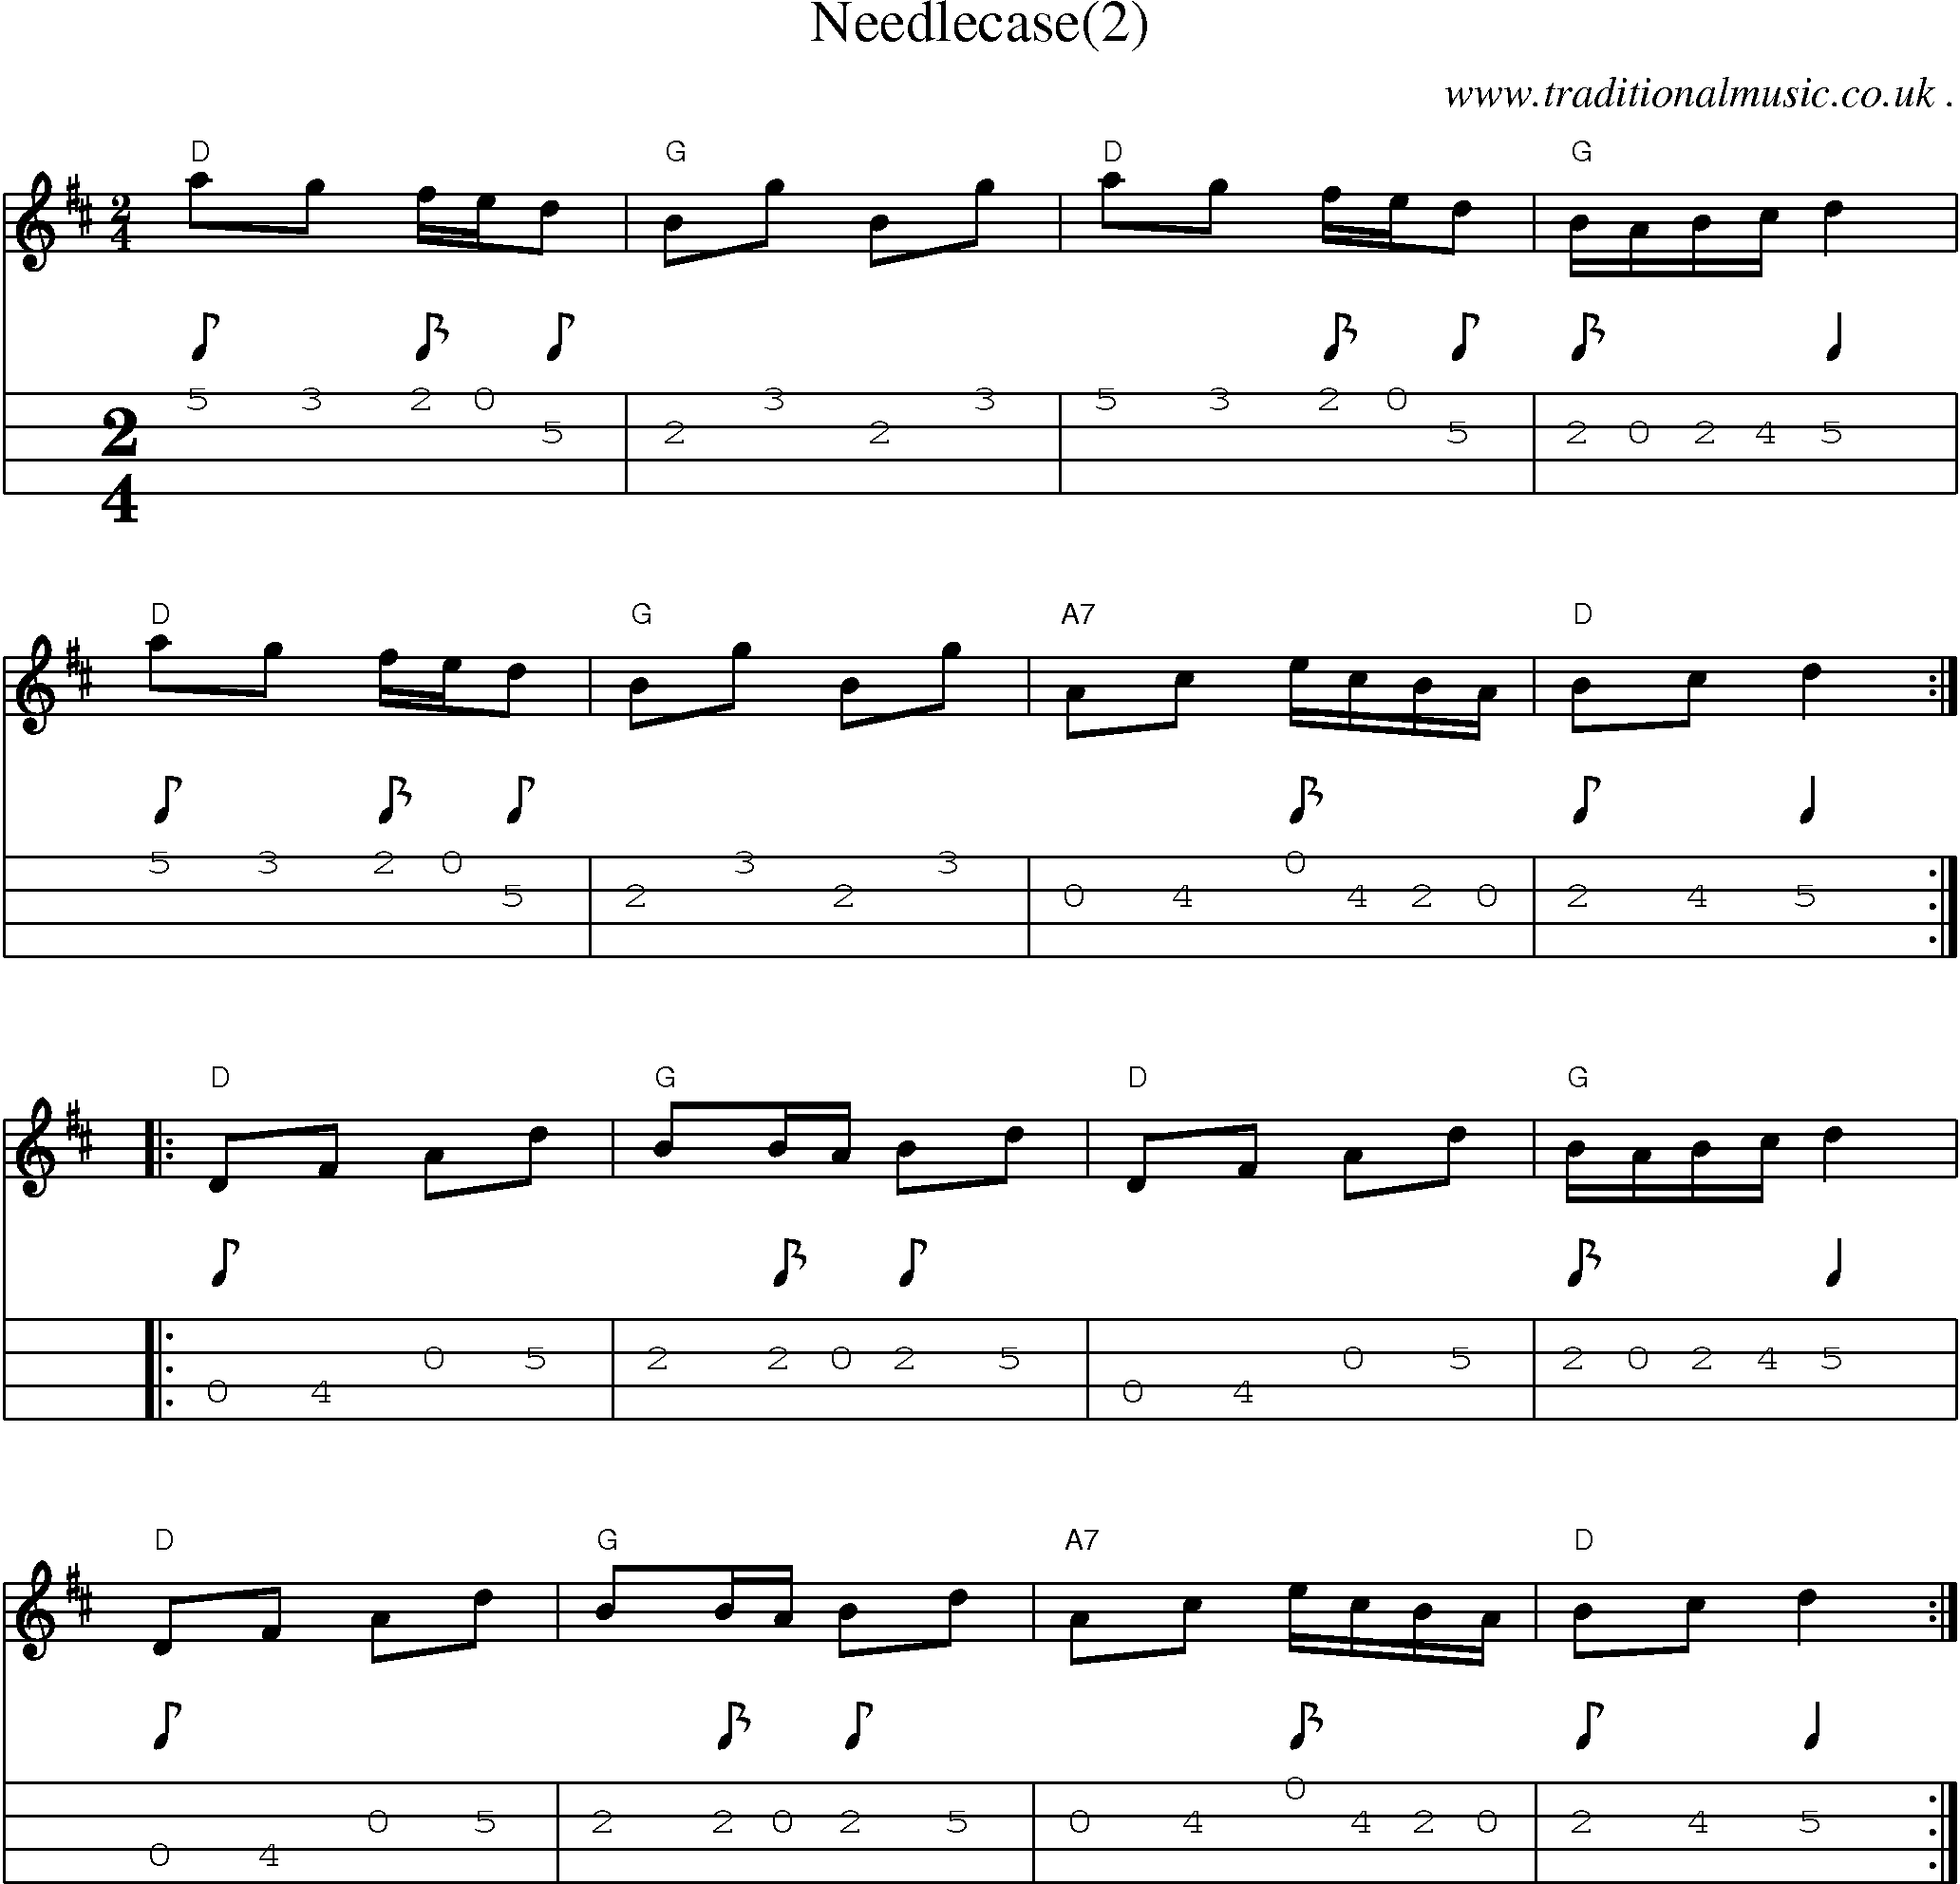 Music Score and Mandolin Tabs for Needlecase(2)